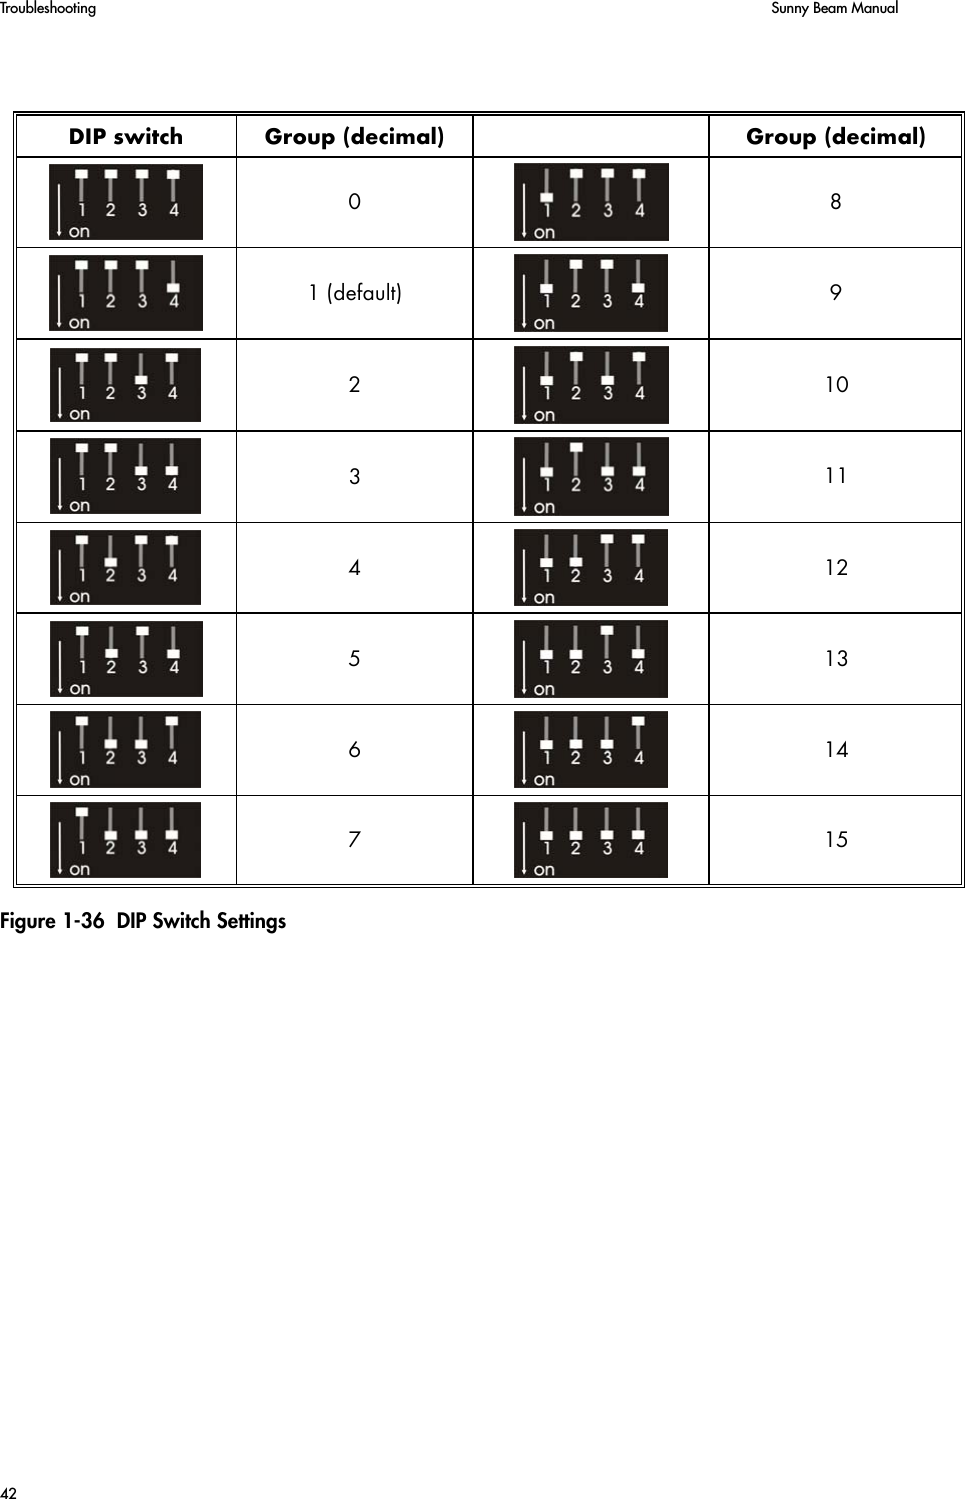 Troubleshooting    Sunny Beam Manual42Figure 1-36  DIP Switch SettingsDIP switch  Group (decimal)    Group (decimal)  0  8  1 (default)  9  2  10  3  11  4  12  5  13  6  14  7  15 